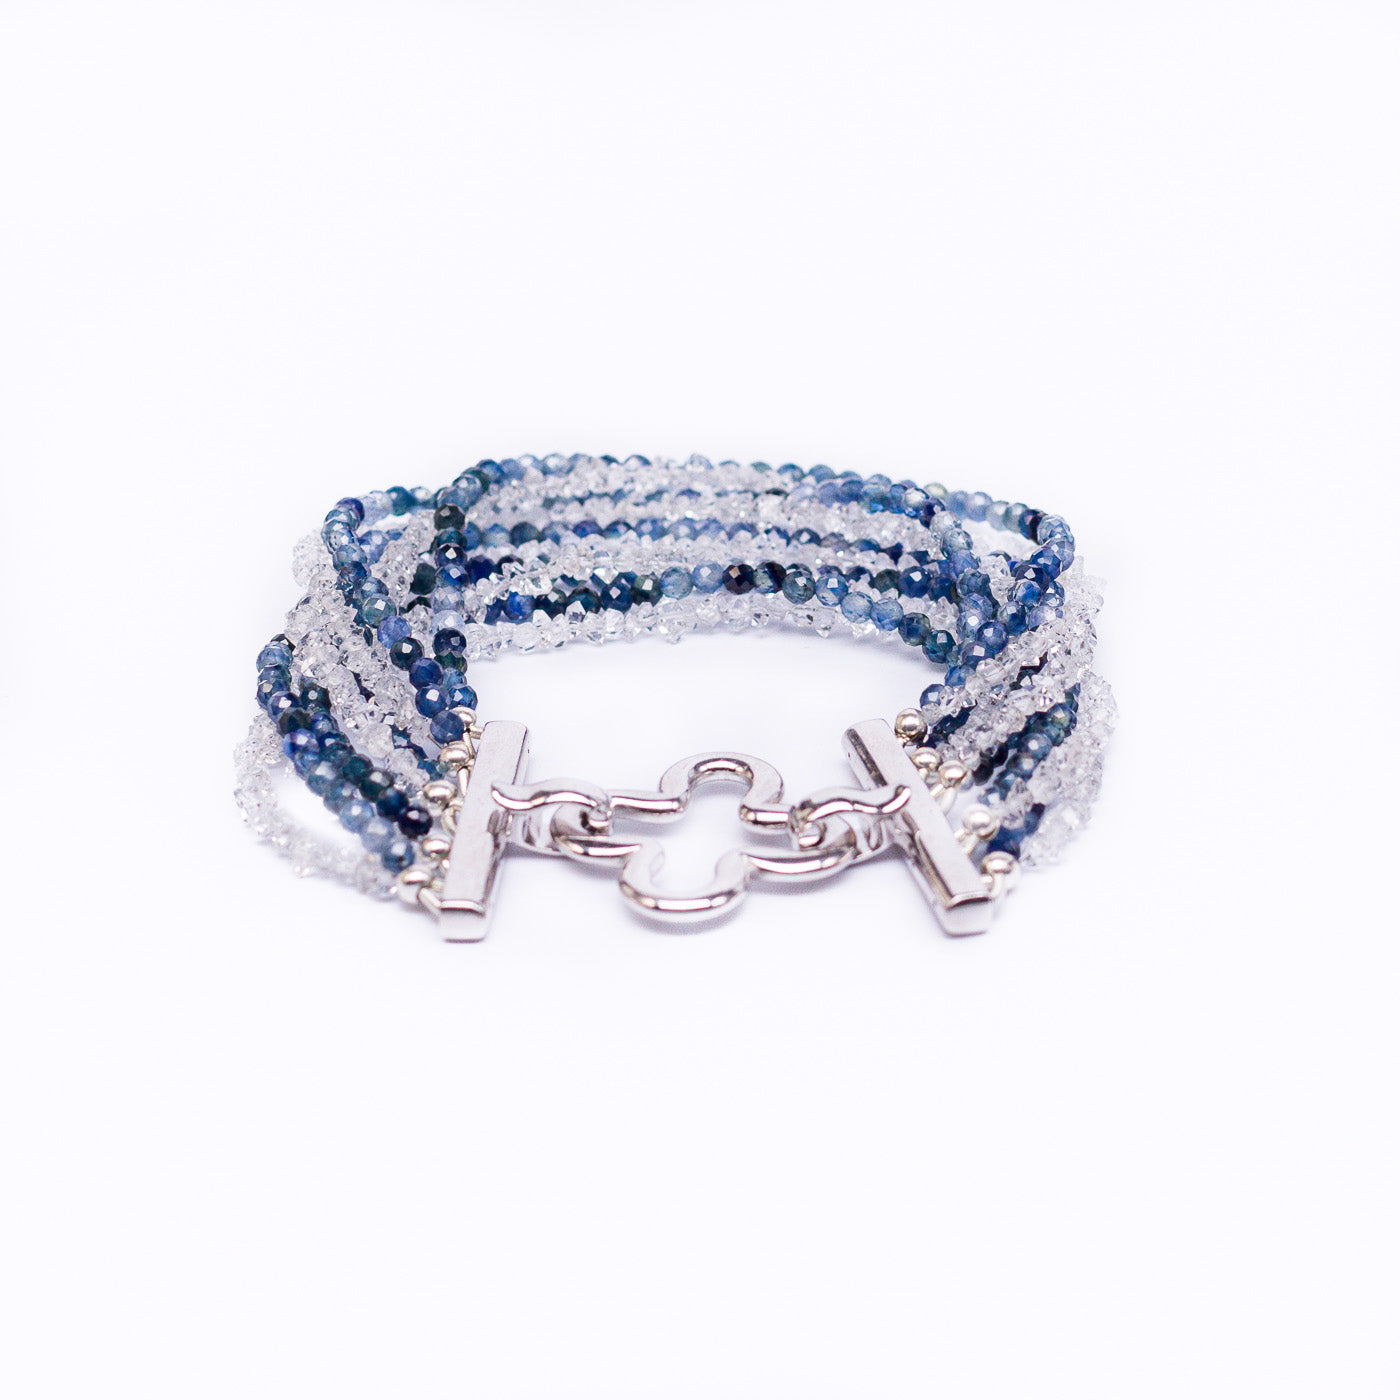 Sparkling Blue Sapphire, Herkimer Diamond & Fine Silver Bracelet